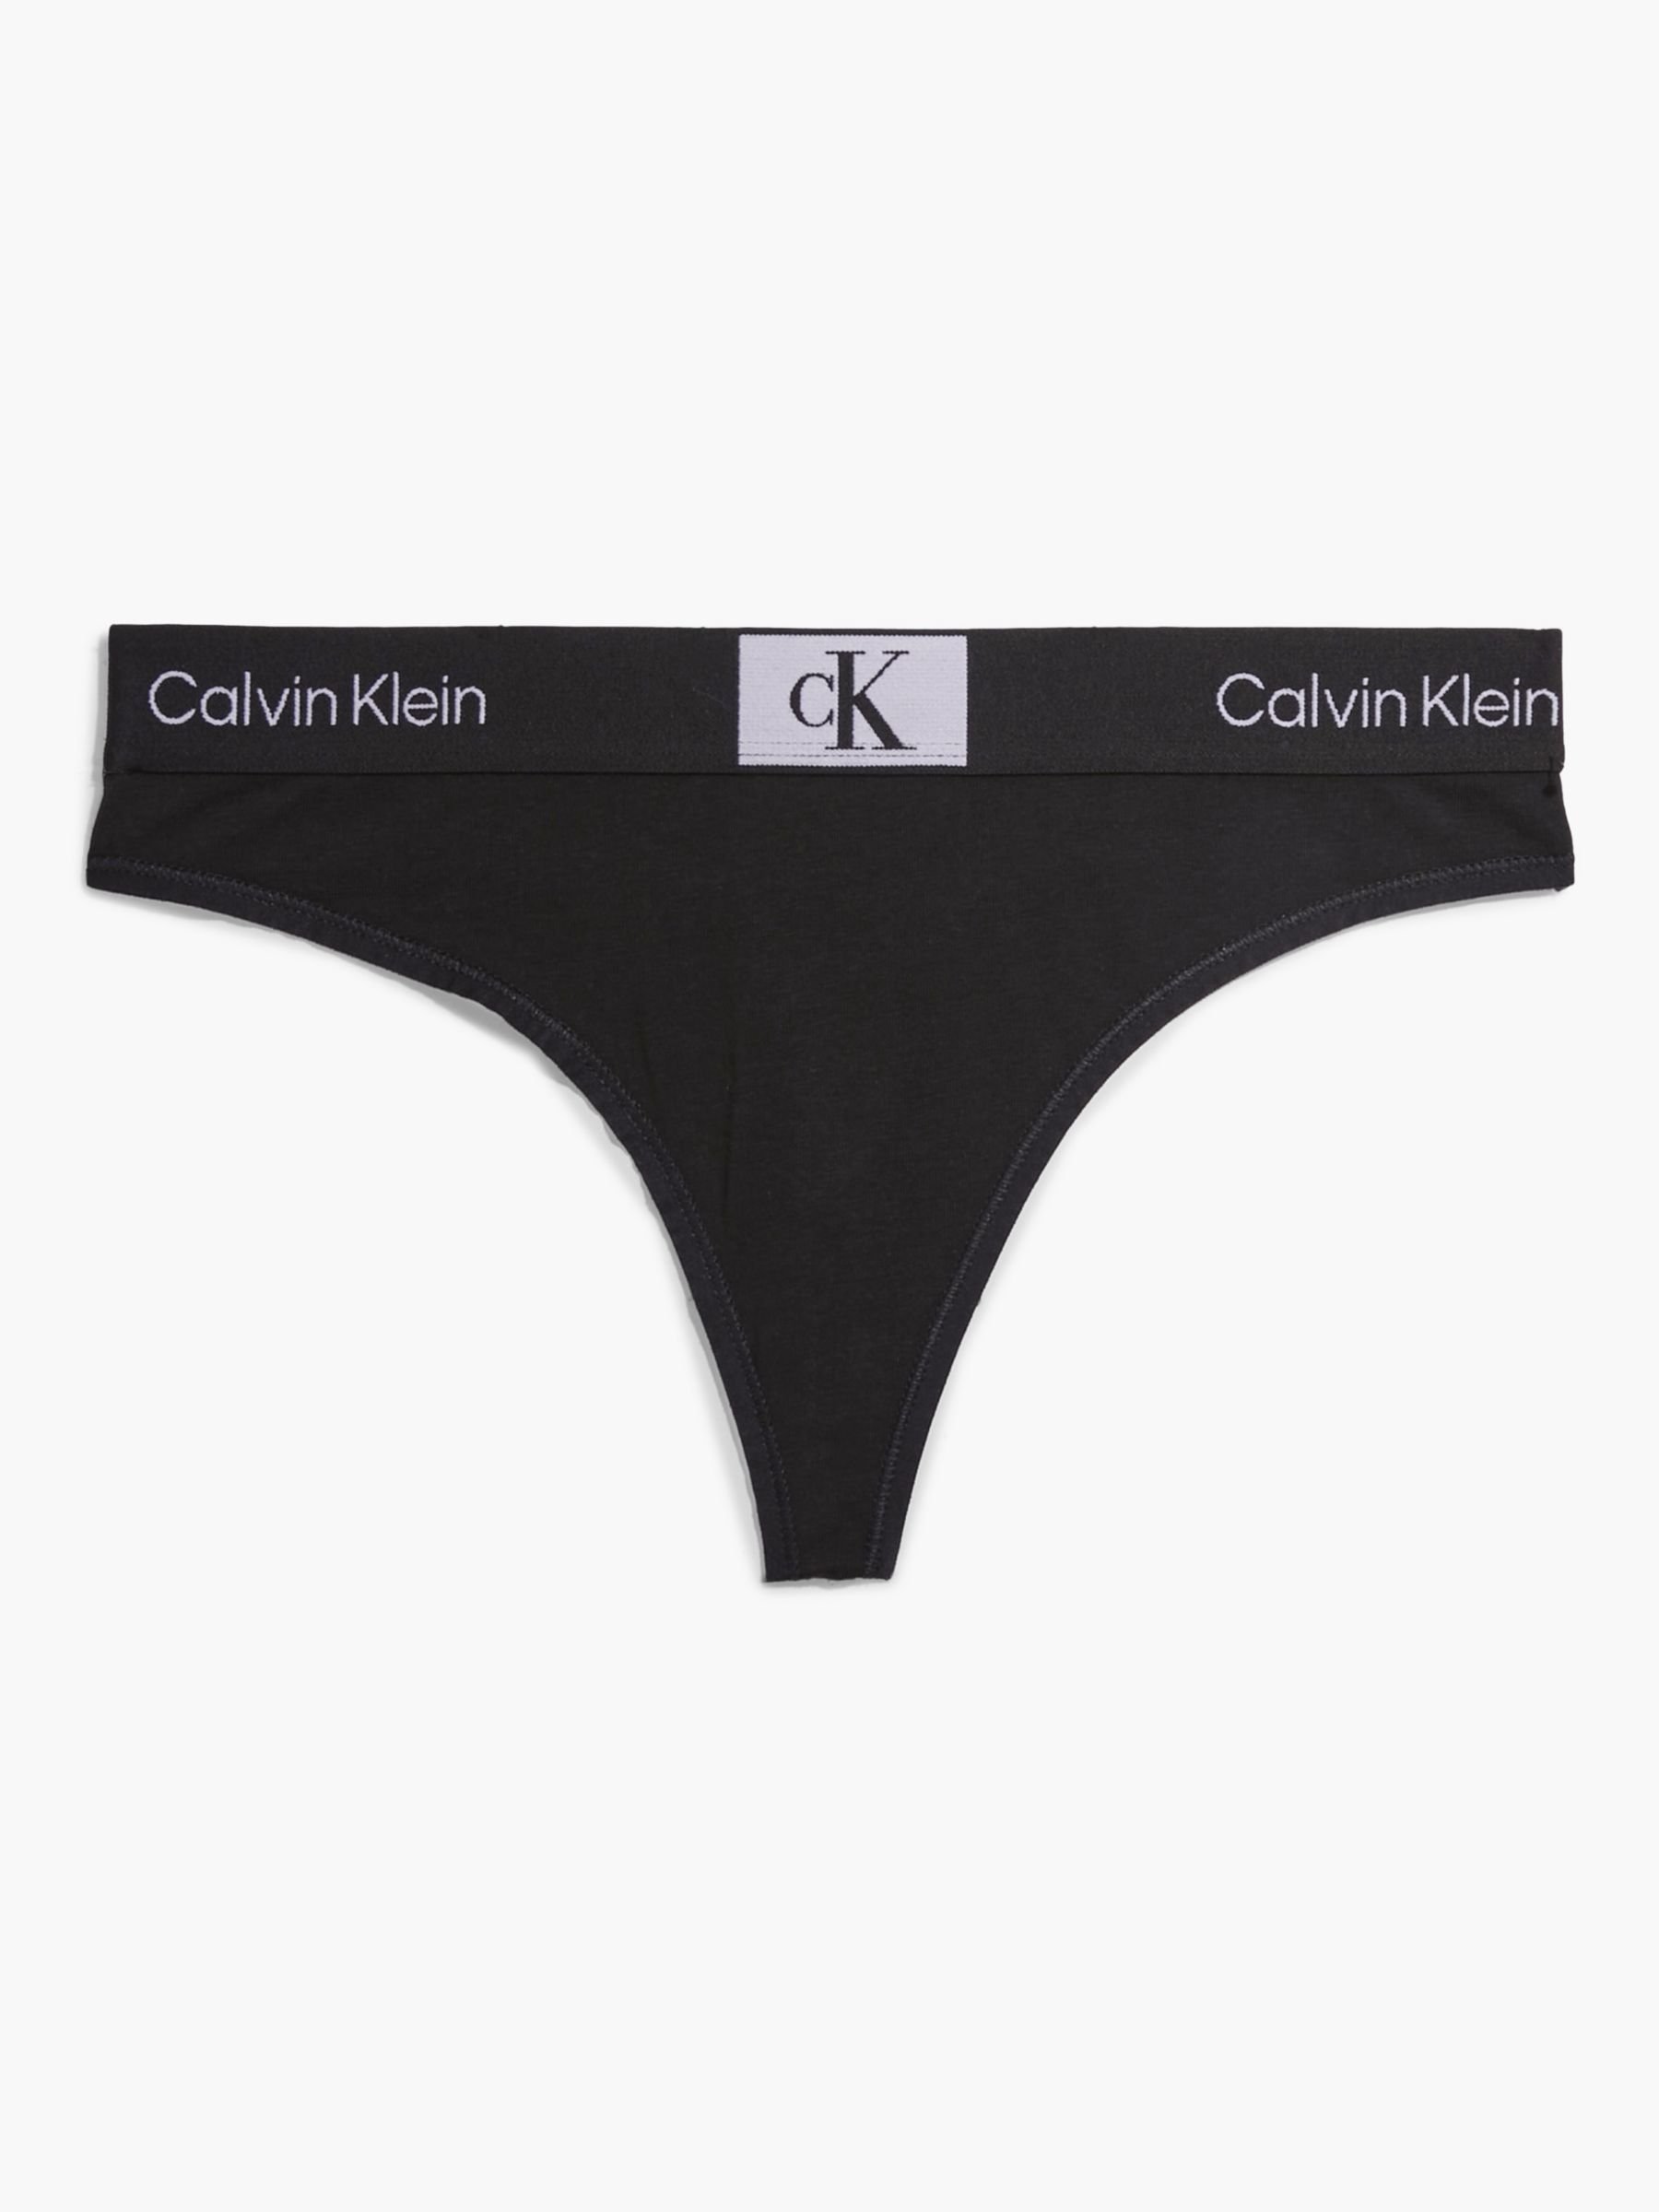 Calvin Klein Invisibles Thong, Black at John Lewis & Partners